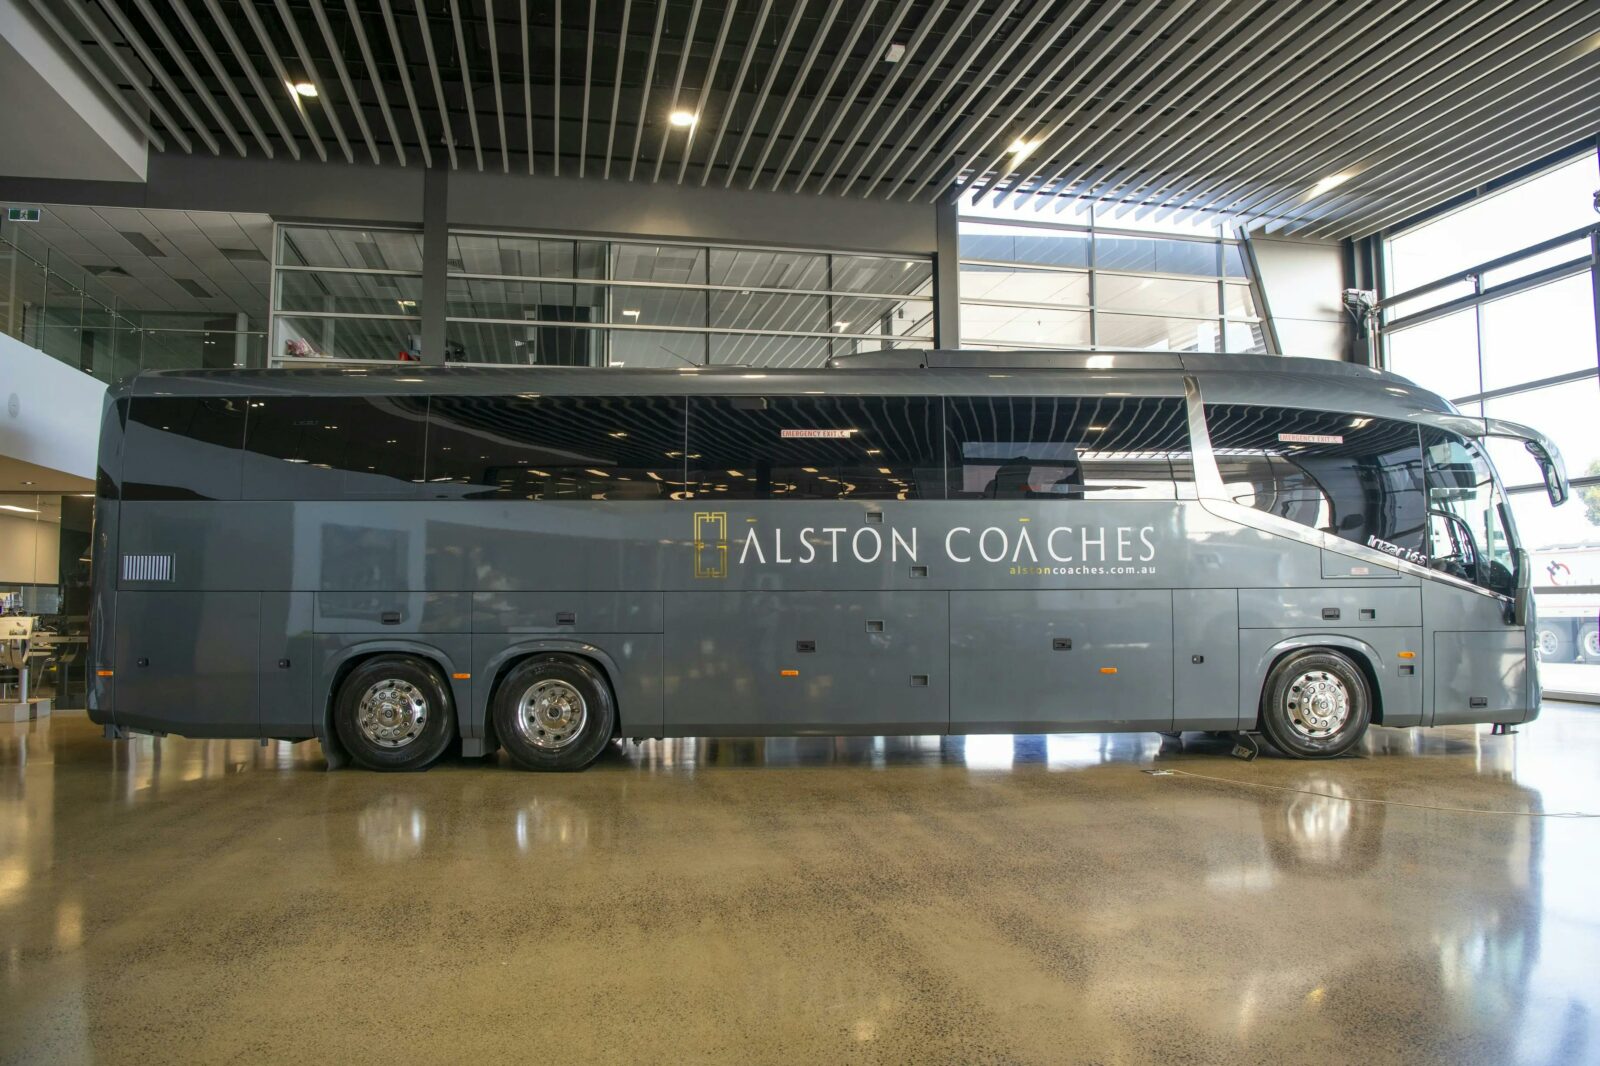 Large coach